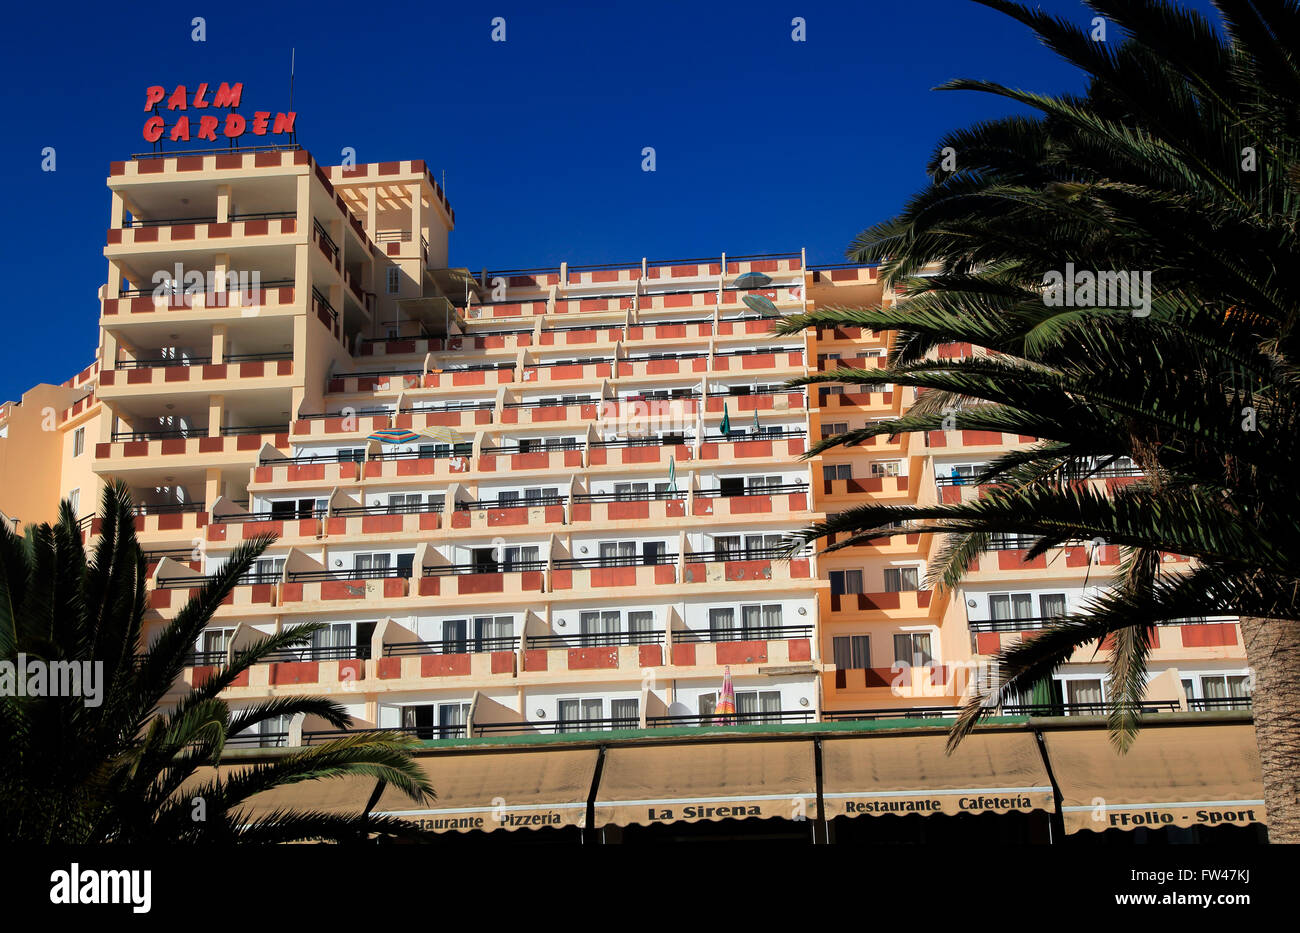 Palm Garden hotel balconies at Solana Matoral, Morro Jable, Jandia peninsula, Fuerteventura, Canary Islands, Spain Stock Photo